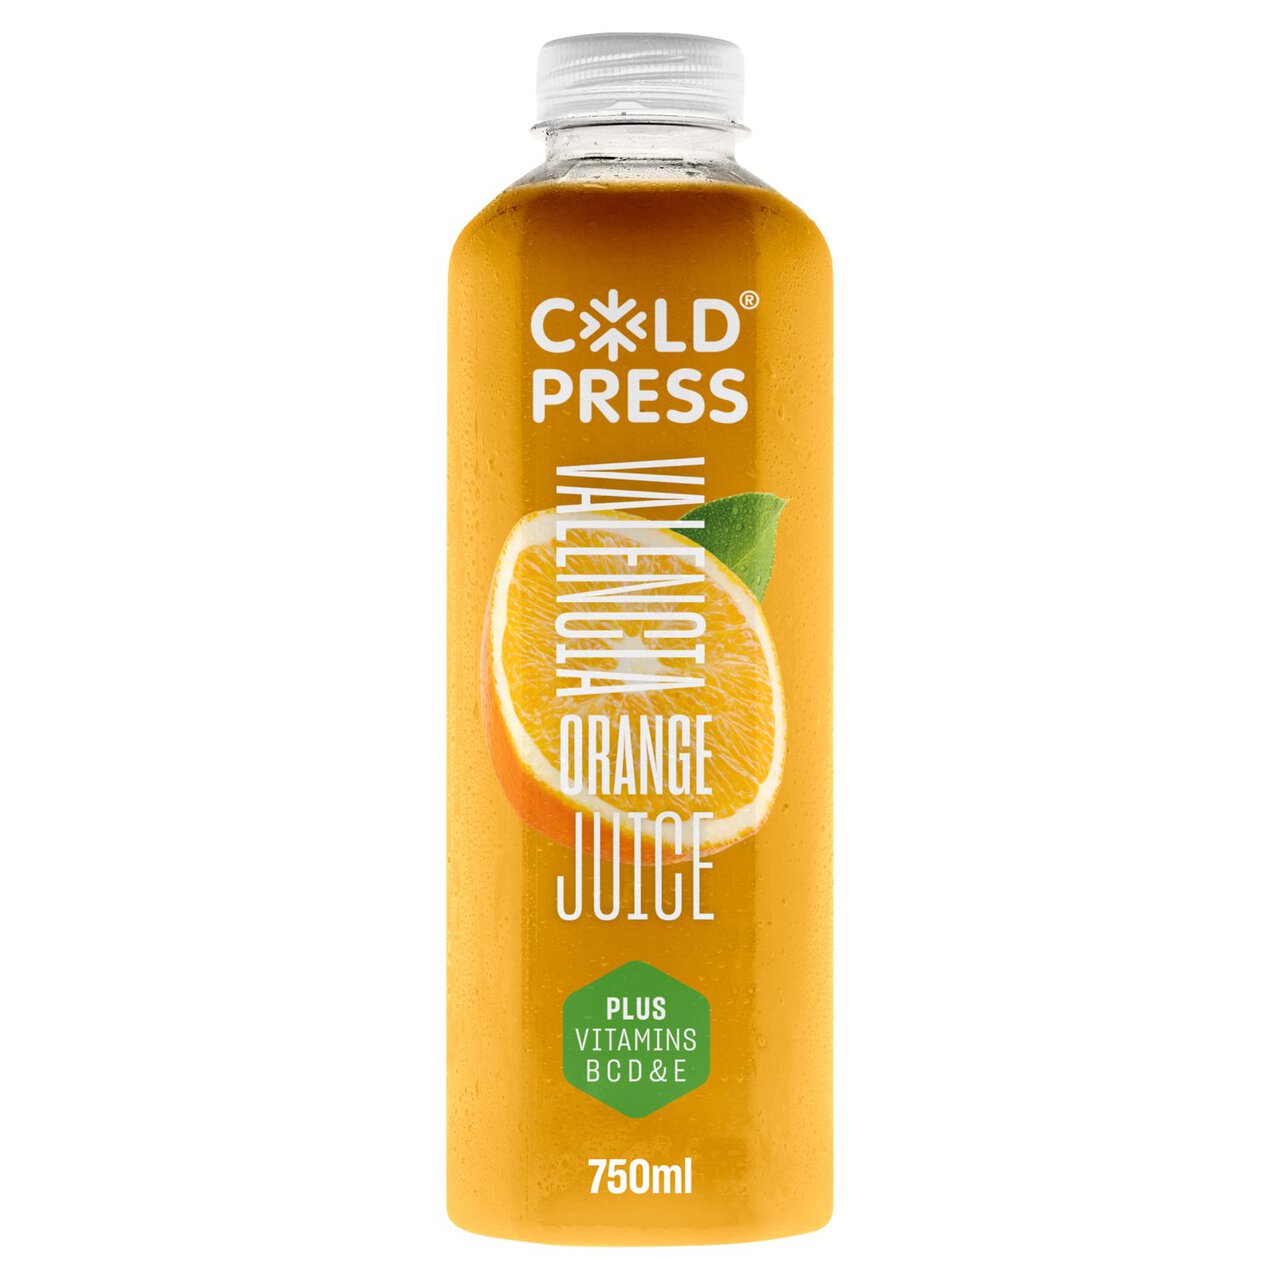 Coldpress Valencia Orange Juice Plus Vitamins 750ml